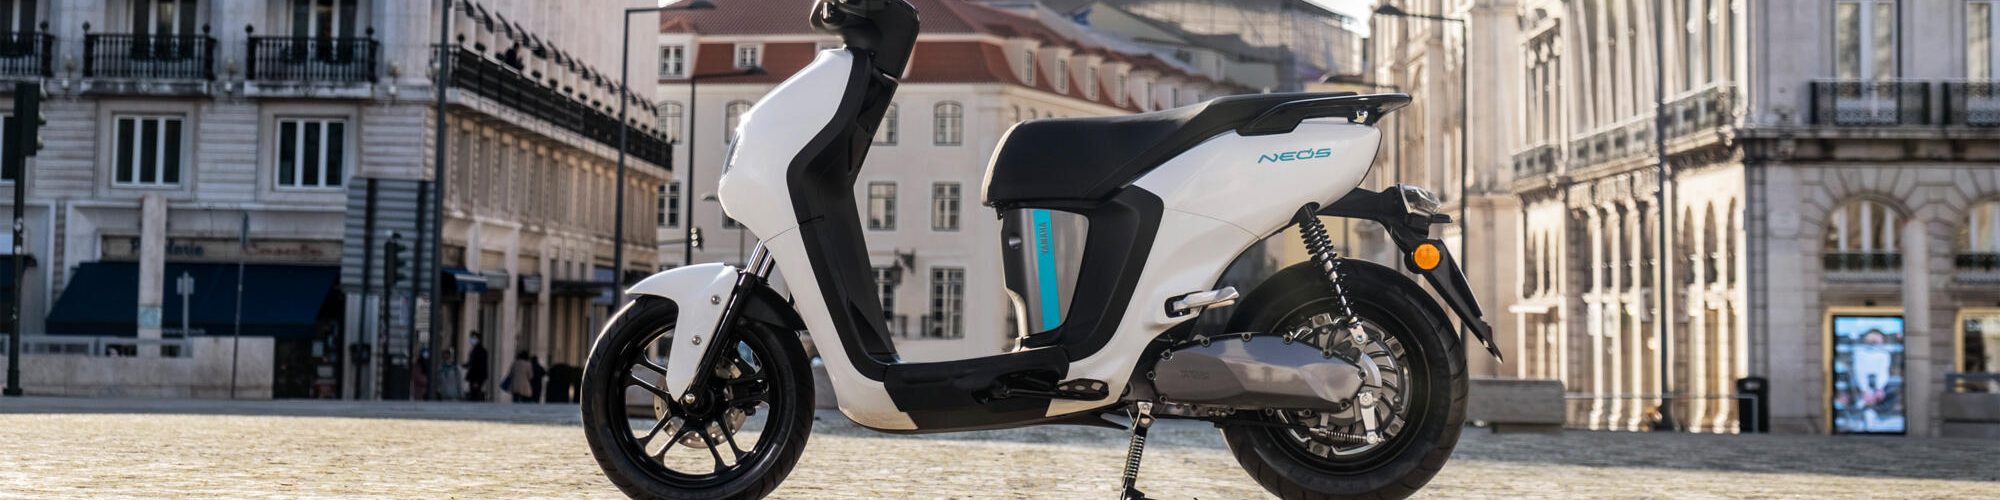 Scooter kopen | Yamaha 2022 Neos elektrische scooter | MotorcentrumWest